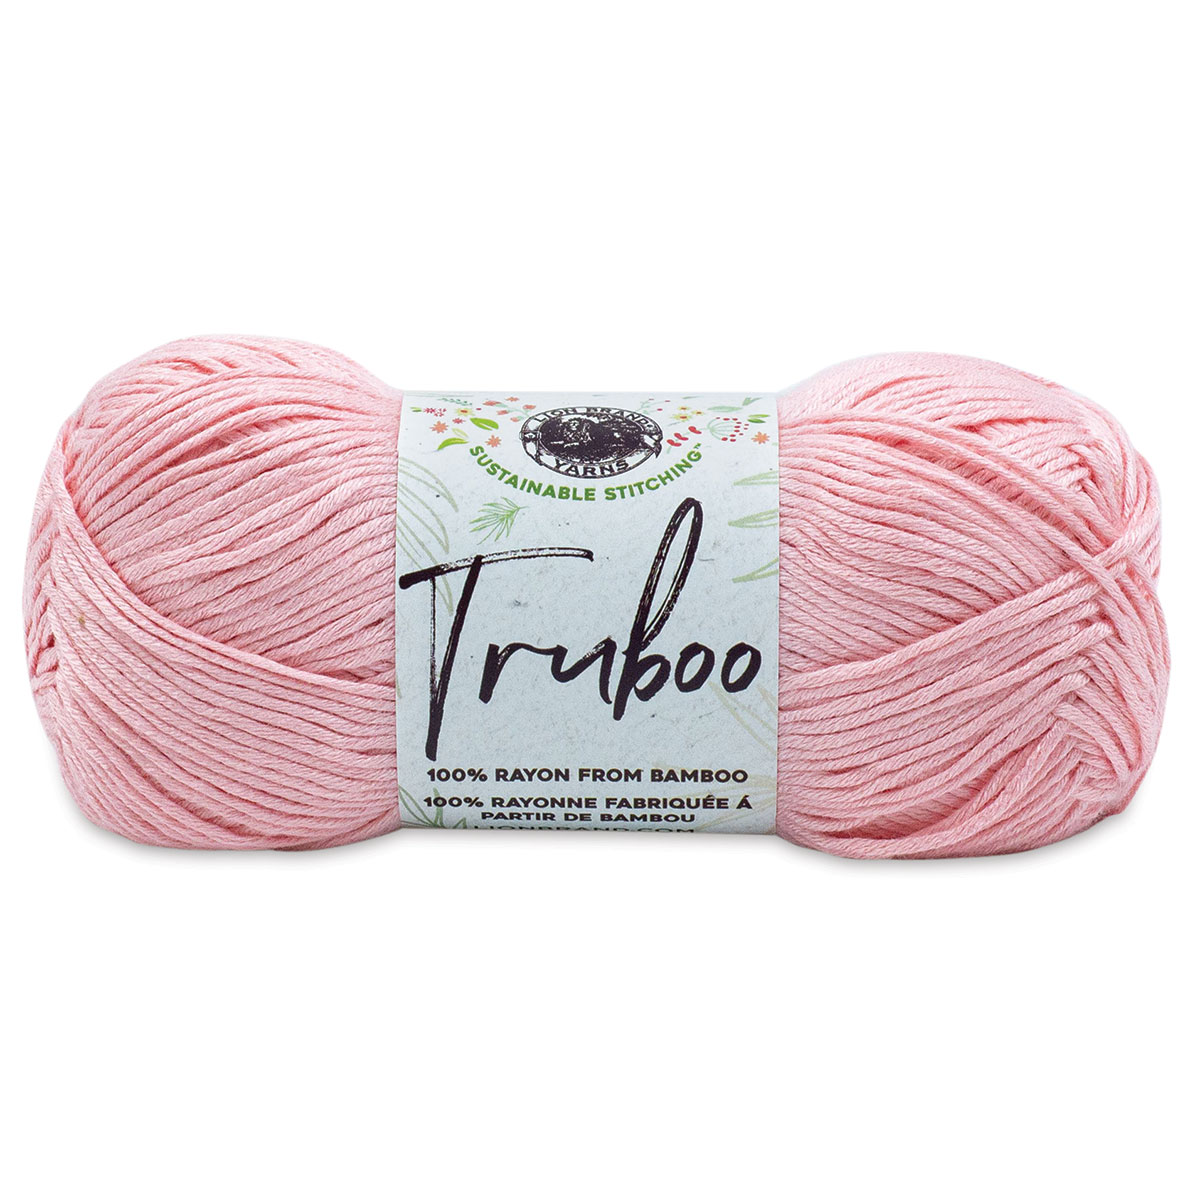 Lion Brand Truboo Yarn - Slate